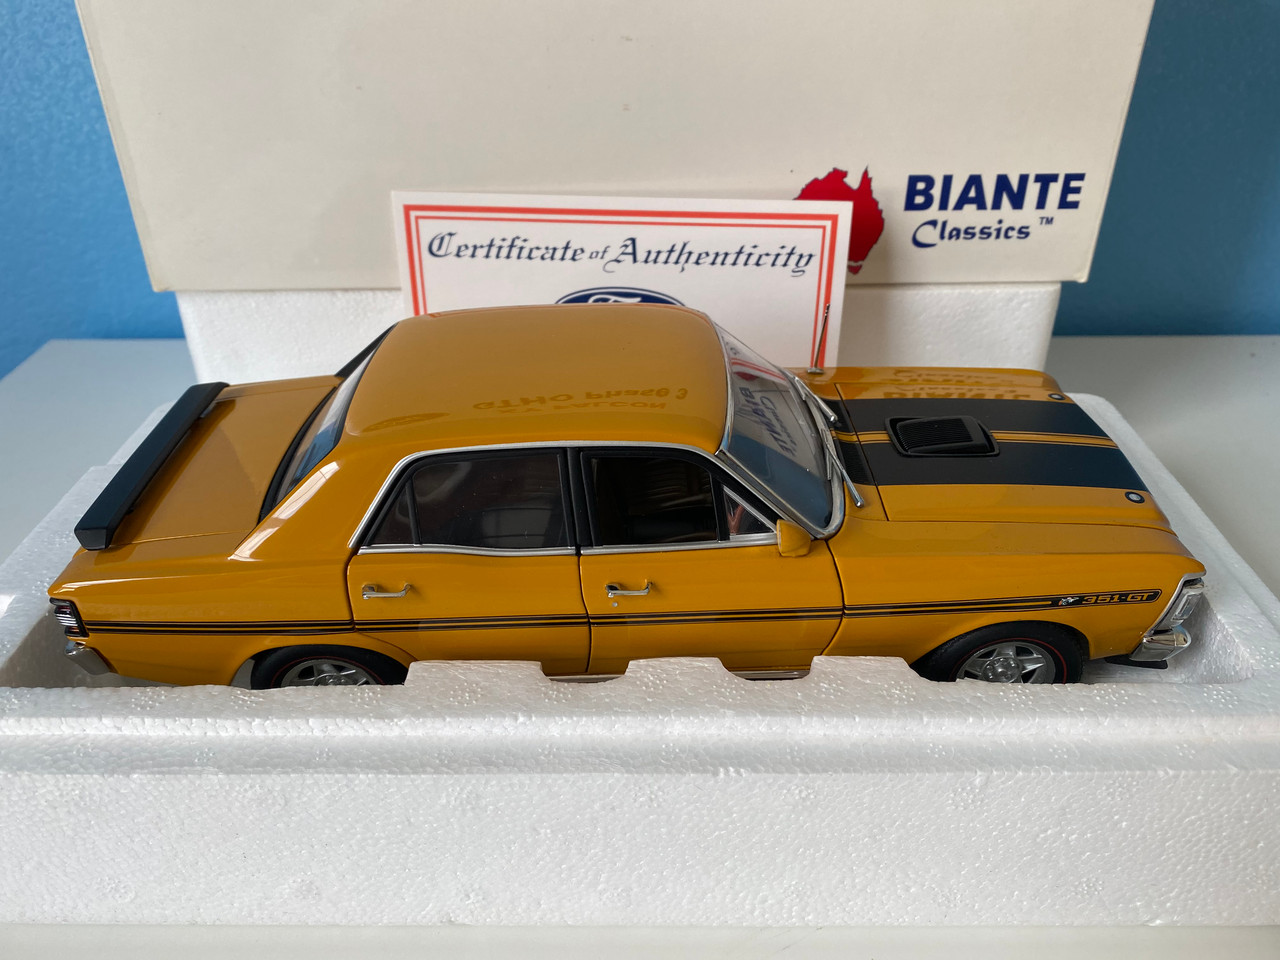 1/18 AUTOart Biante Classic Ford XY Falcon GTHO Phase 3 Diecast Car Model